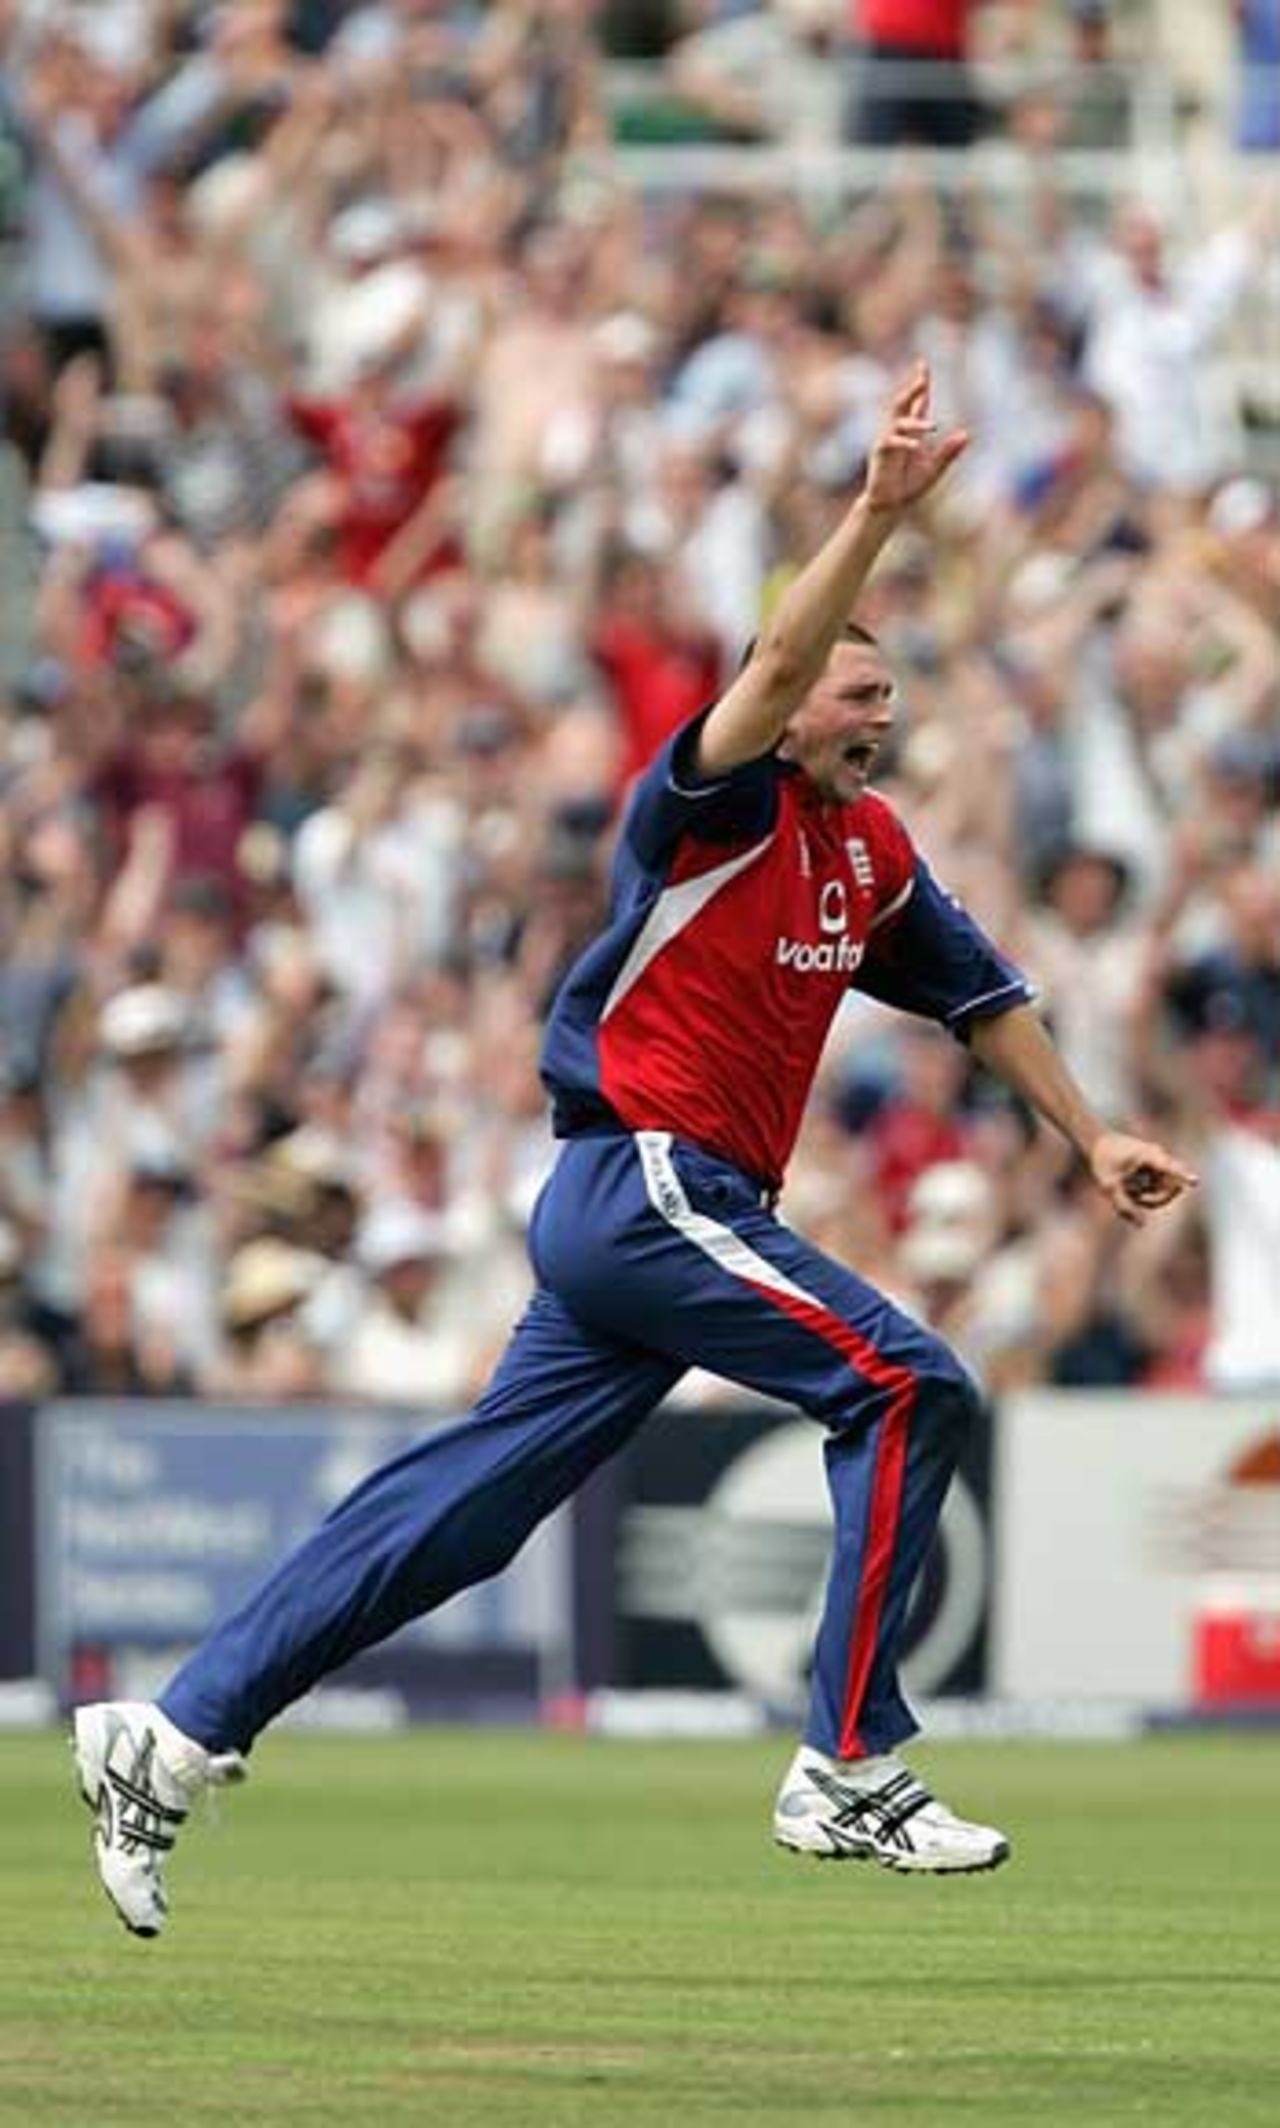 Steve Harmison celebrates the wicket of Damien Martyn, England v Australia, NatWest Series, Bristol, June 19